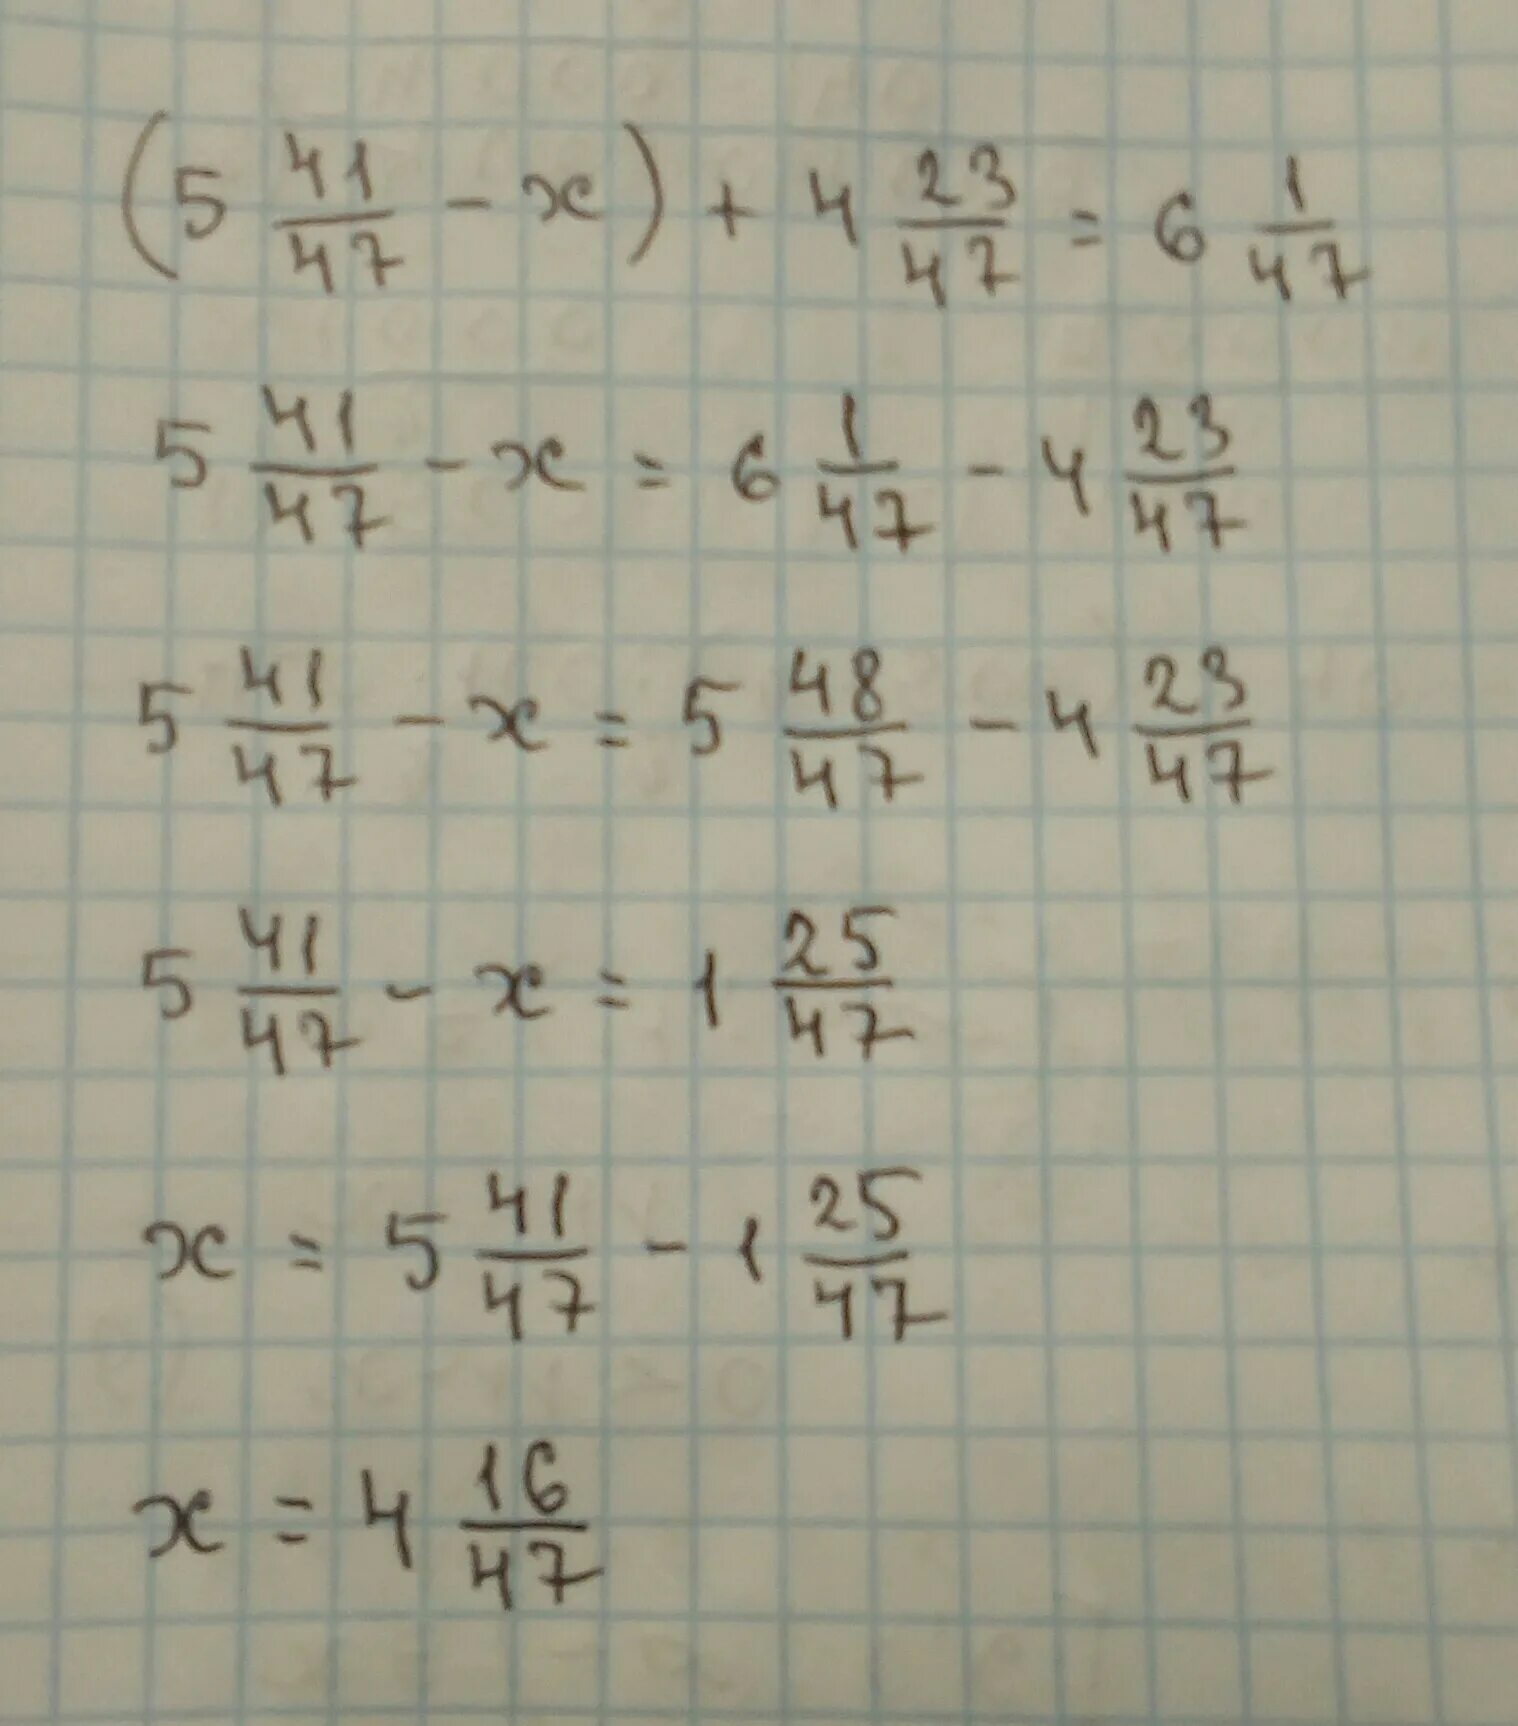 5 7 21 x. 5 44/47-Х +4 23/47 6 1/47. 4,2:1,47 Решение. Пример 47 6. -47x=1.